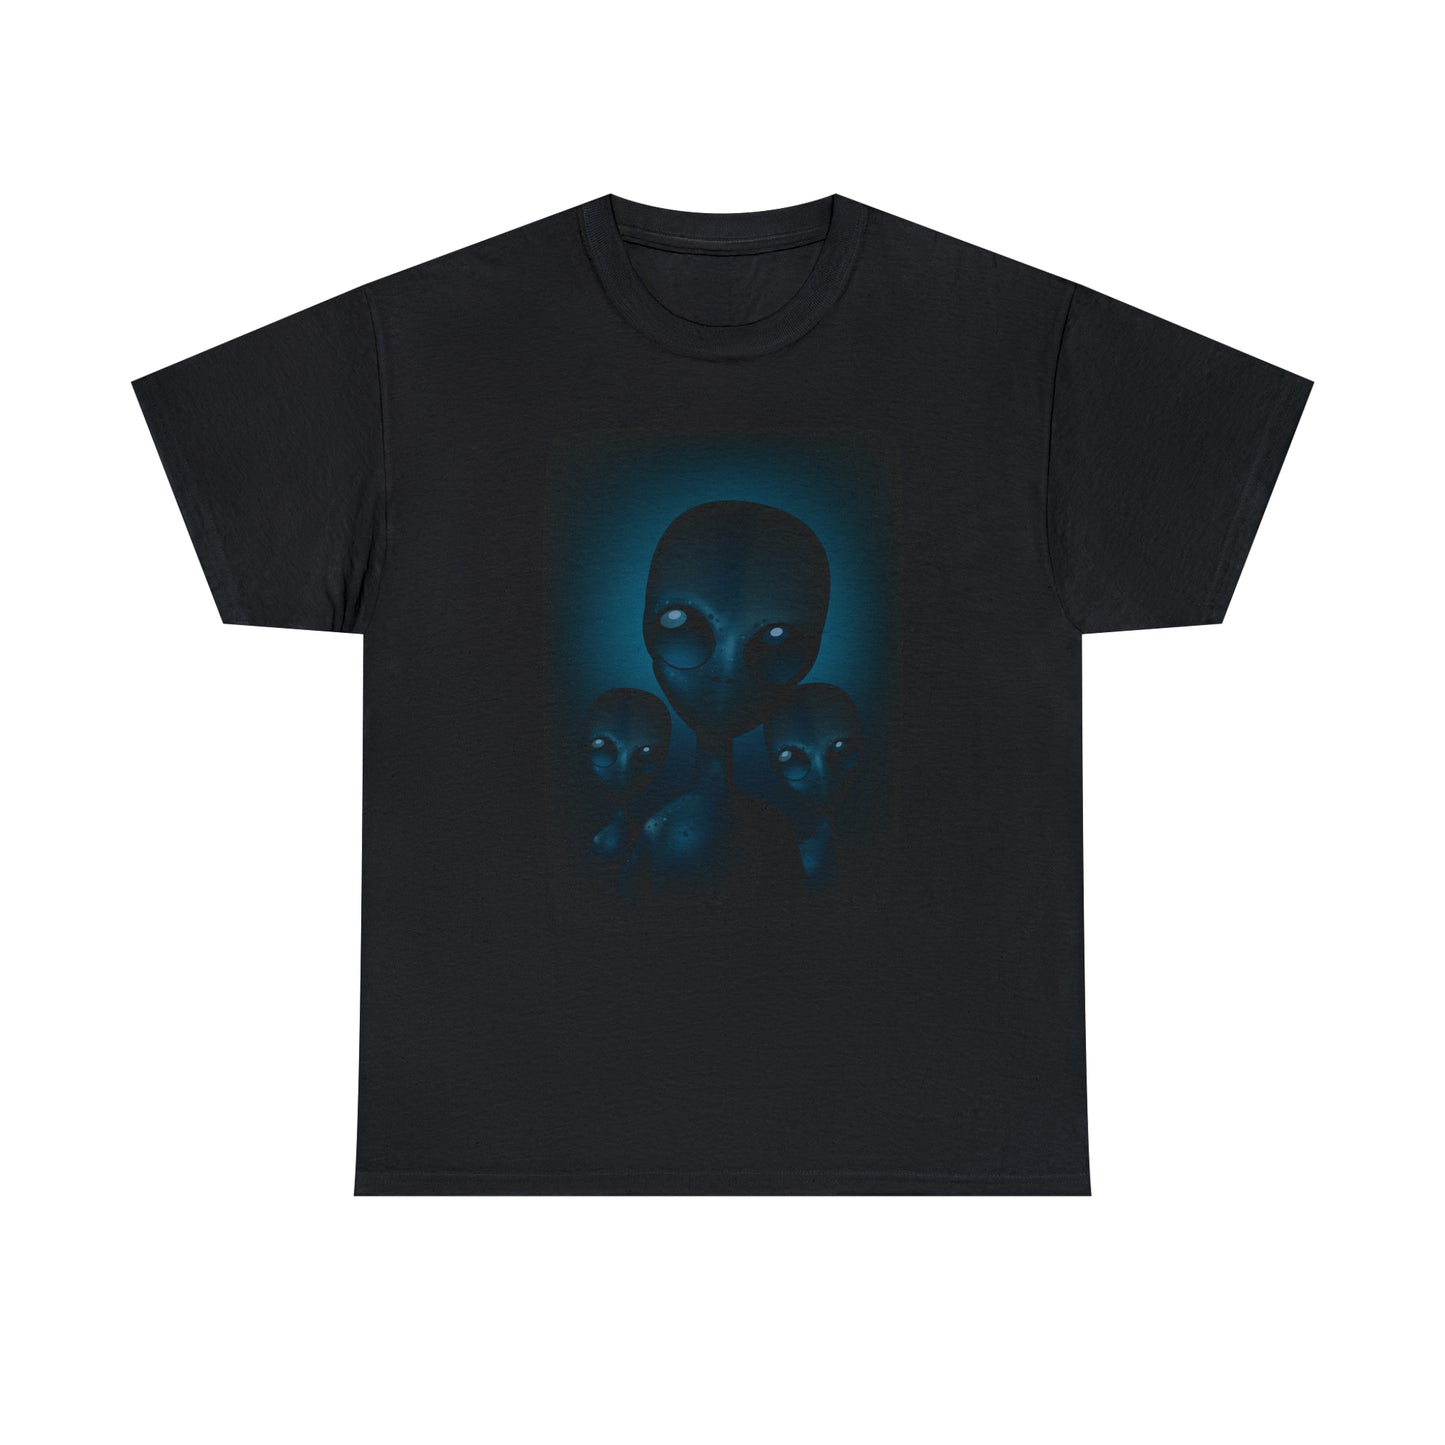 Alien T-Shirt For World UFO Day TShirt For Extraterrestrial T Shirt For UFOlogist Shirt For Disclosure T Shirt